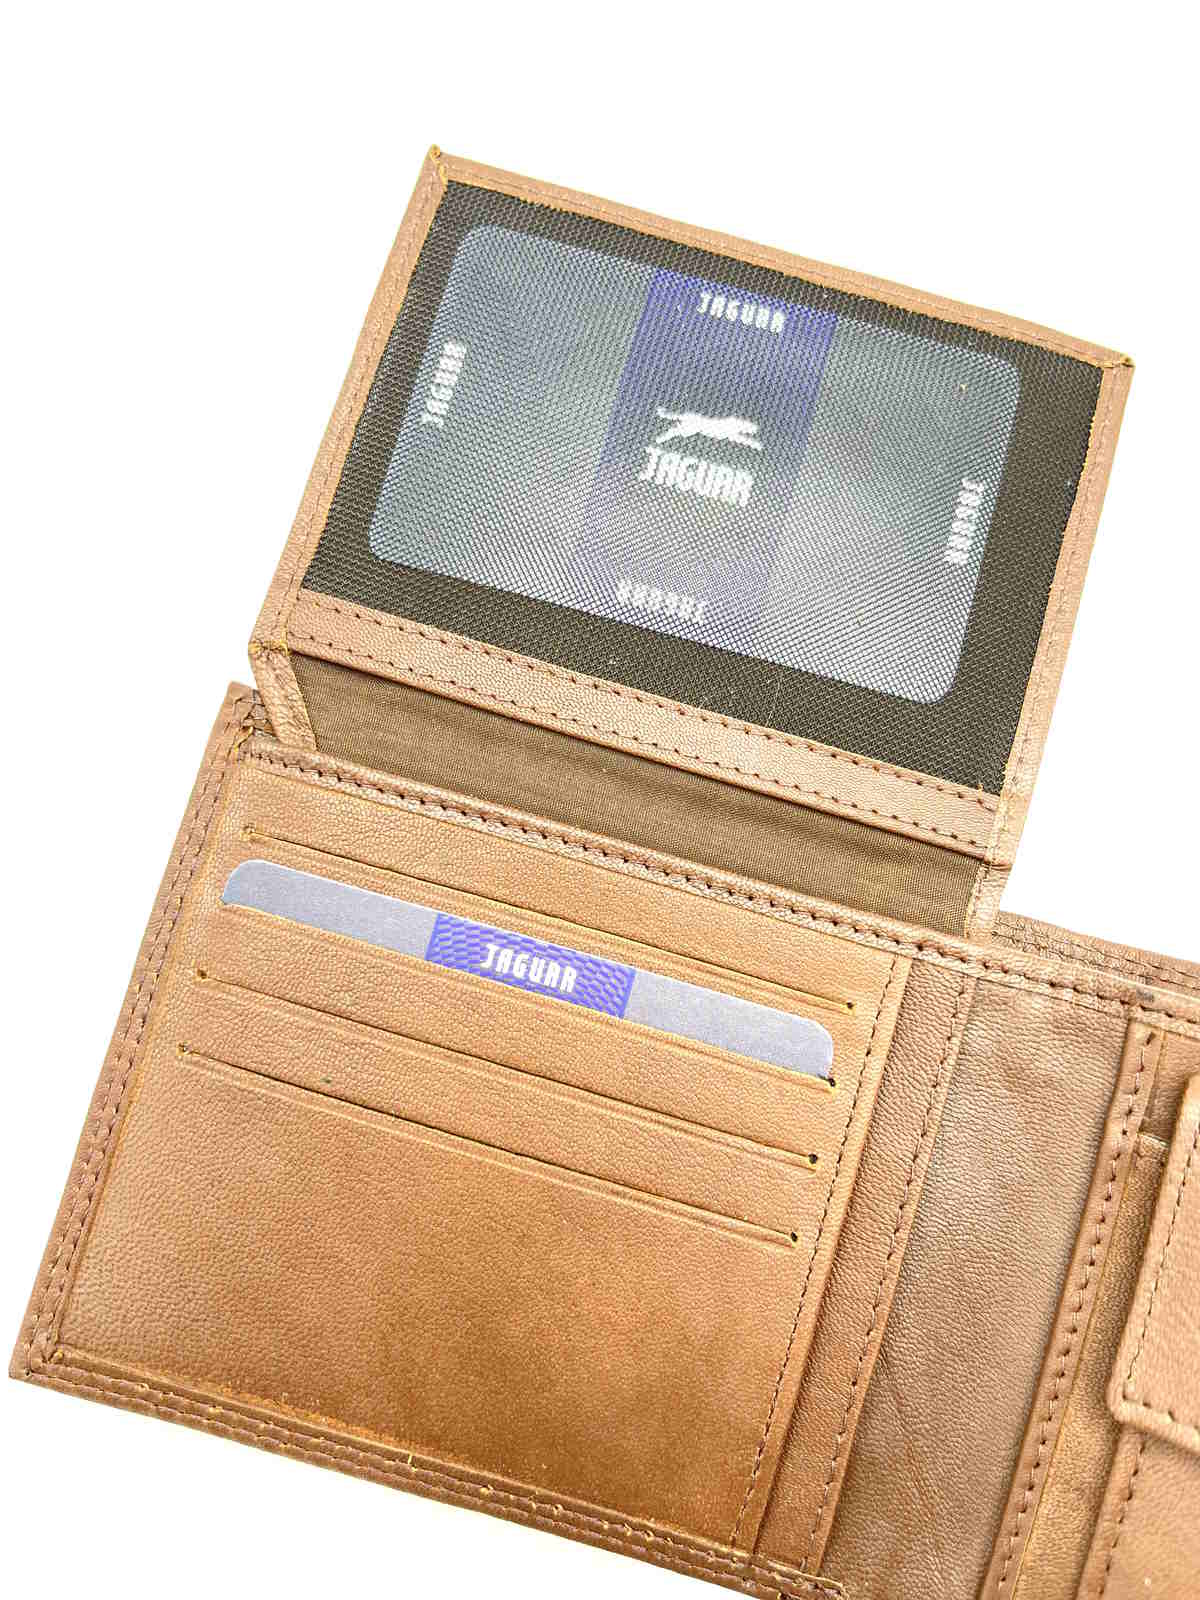 Genuine leather wallet, for men, Brand Jaguar, art. PF747-1.062